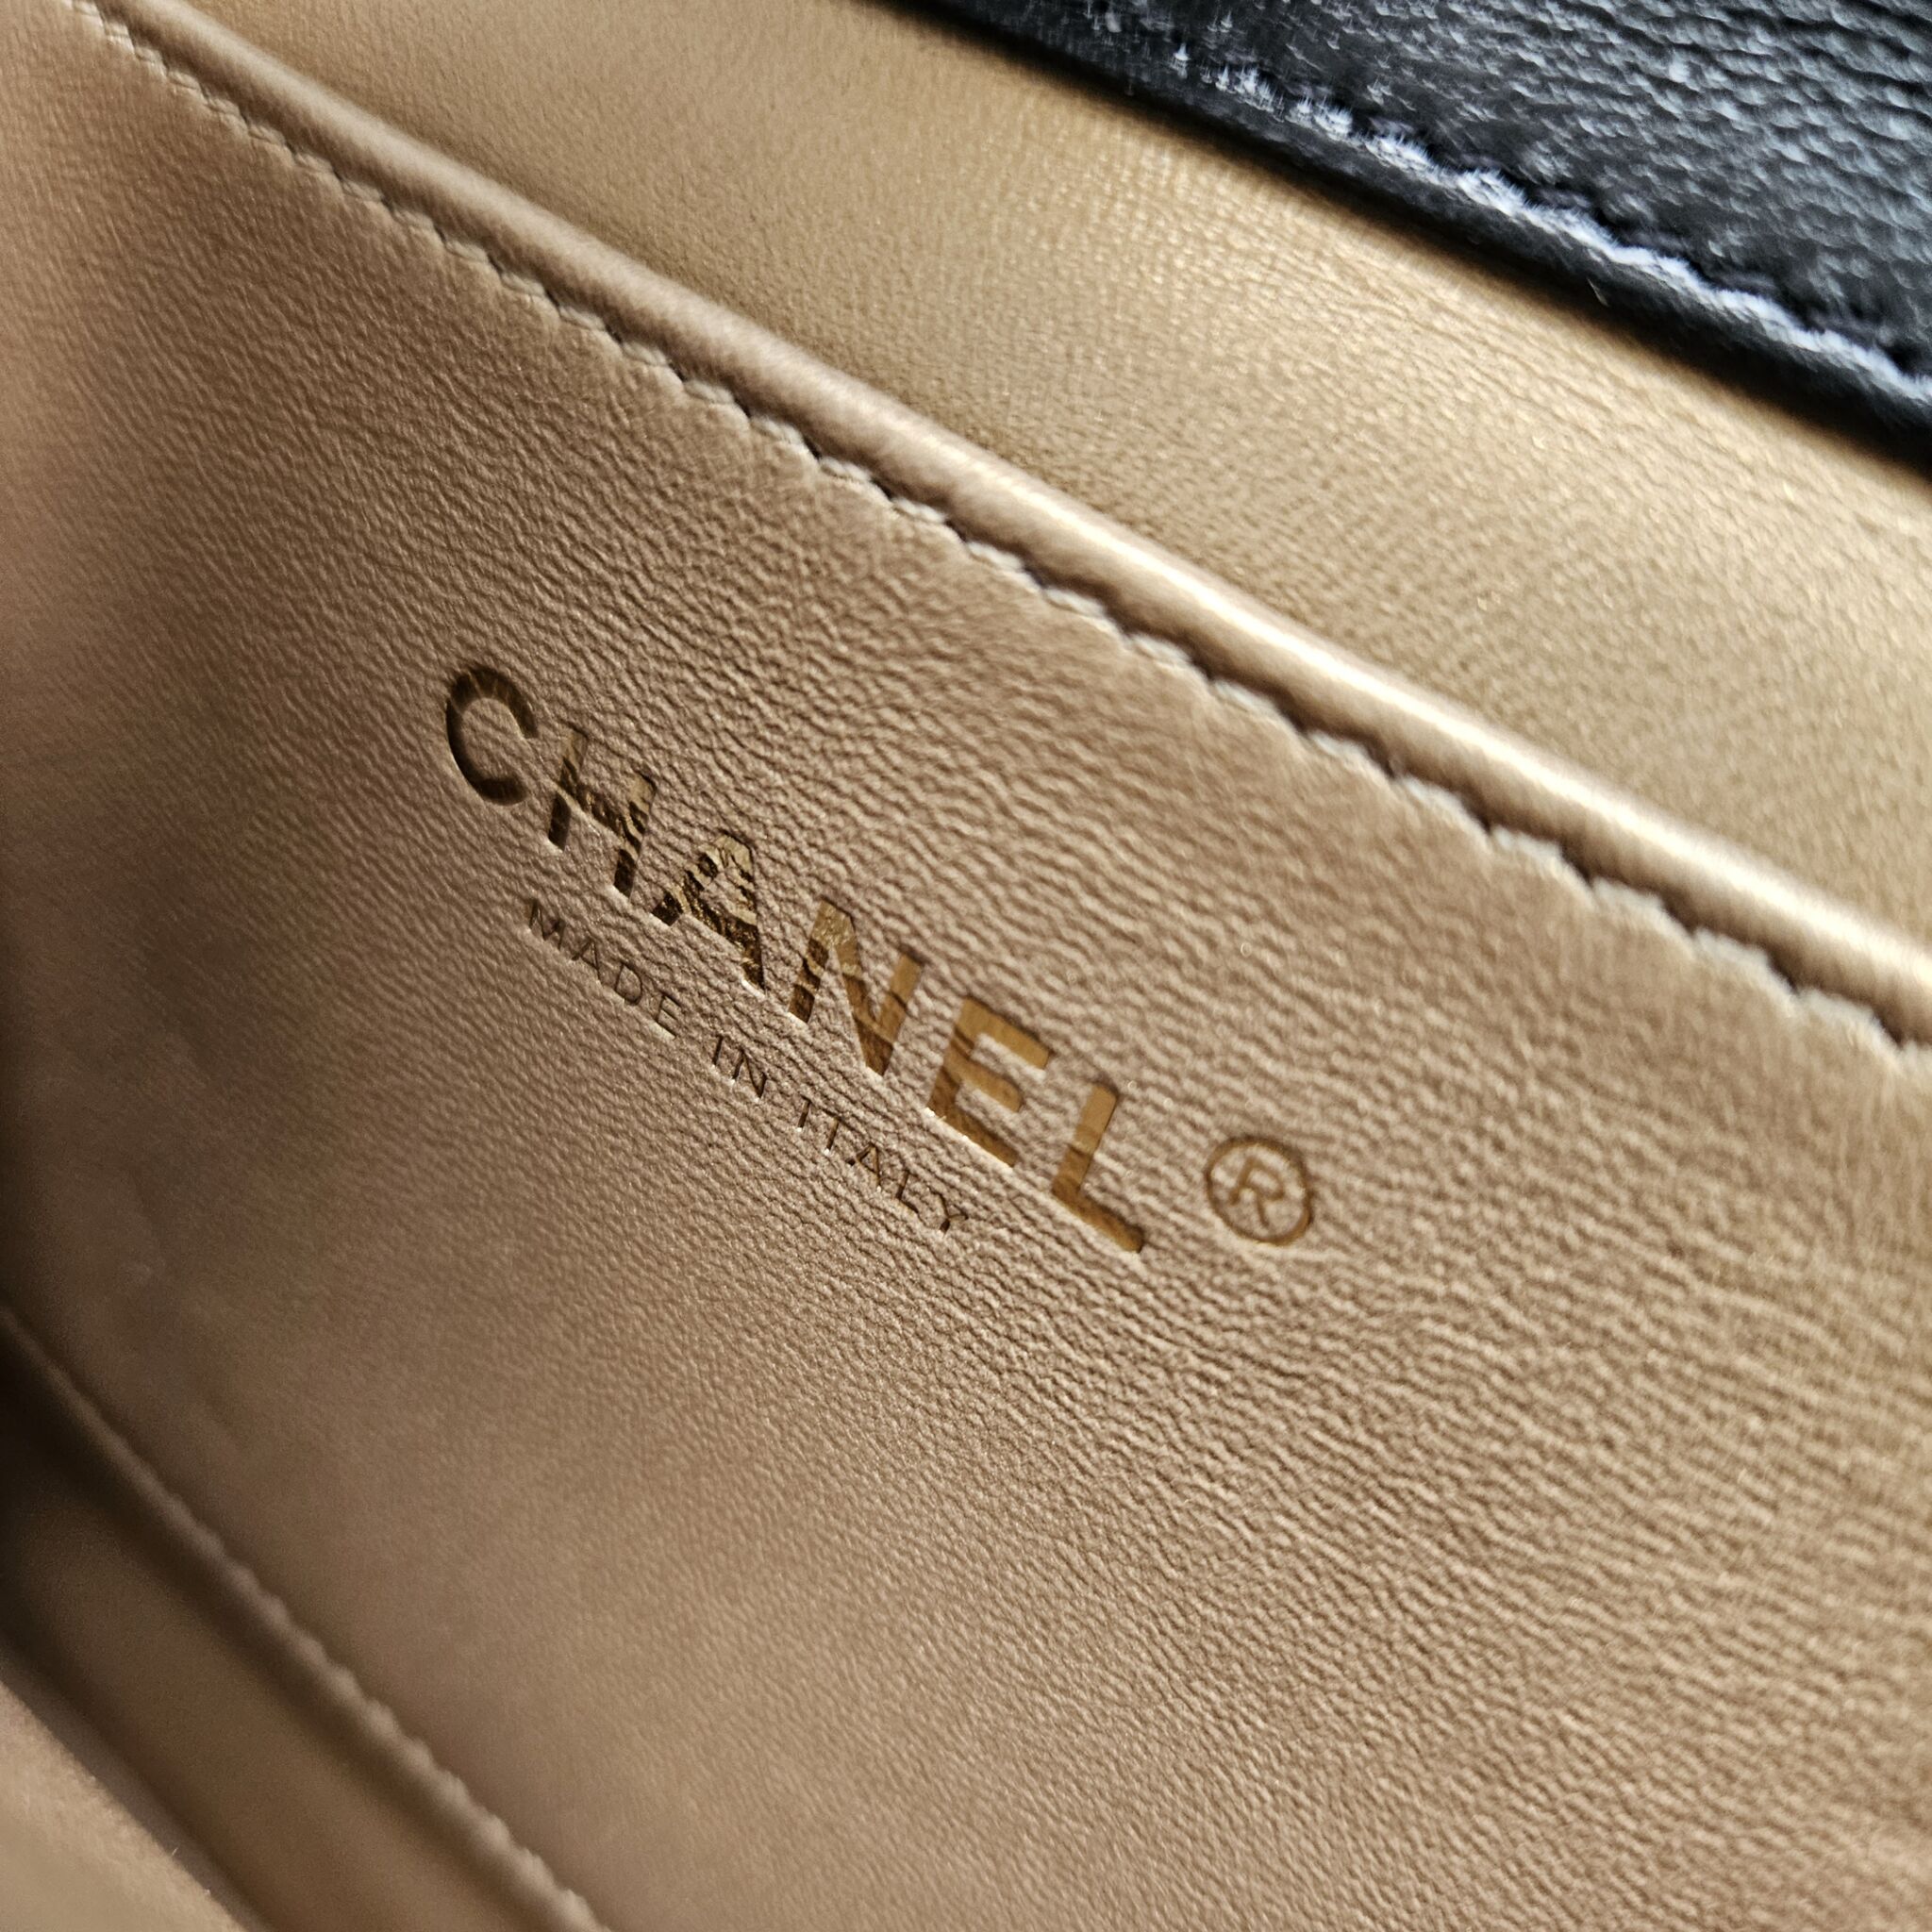 Chanel Flap Bag Calfskin Crystal Pearls  GoldTone Metal black  Nice Bag